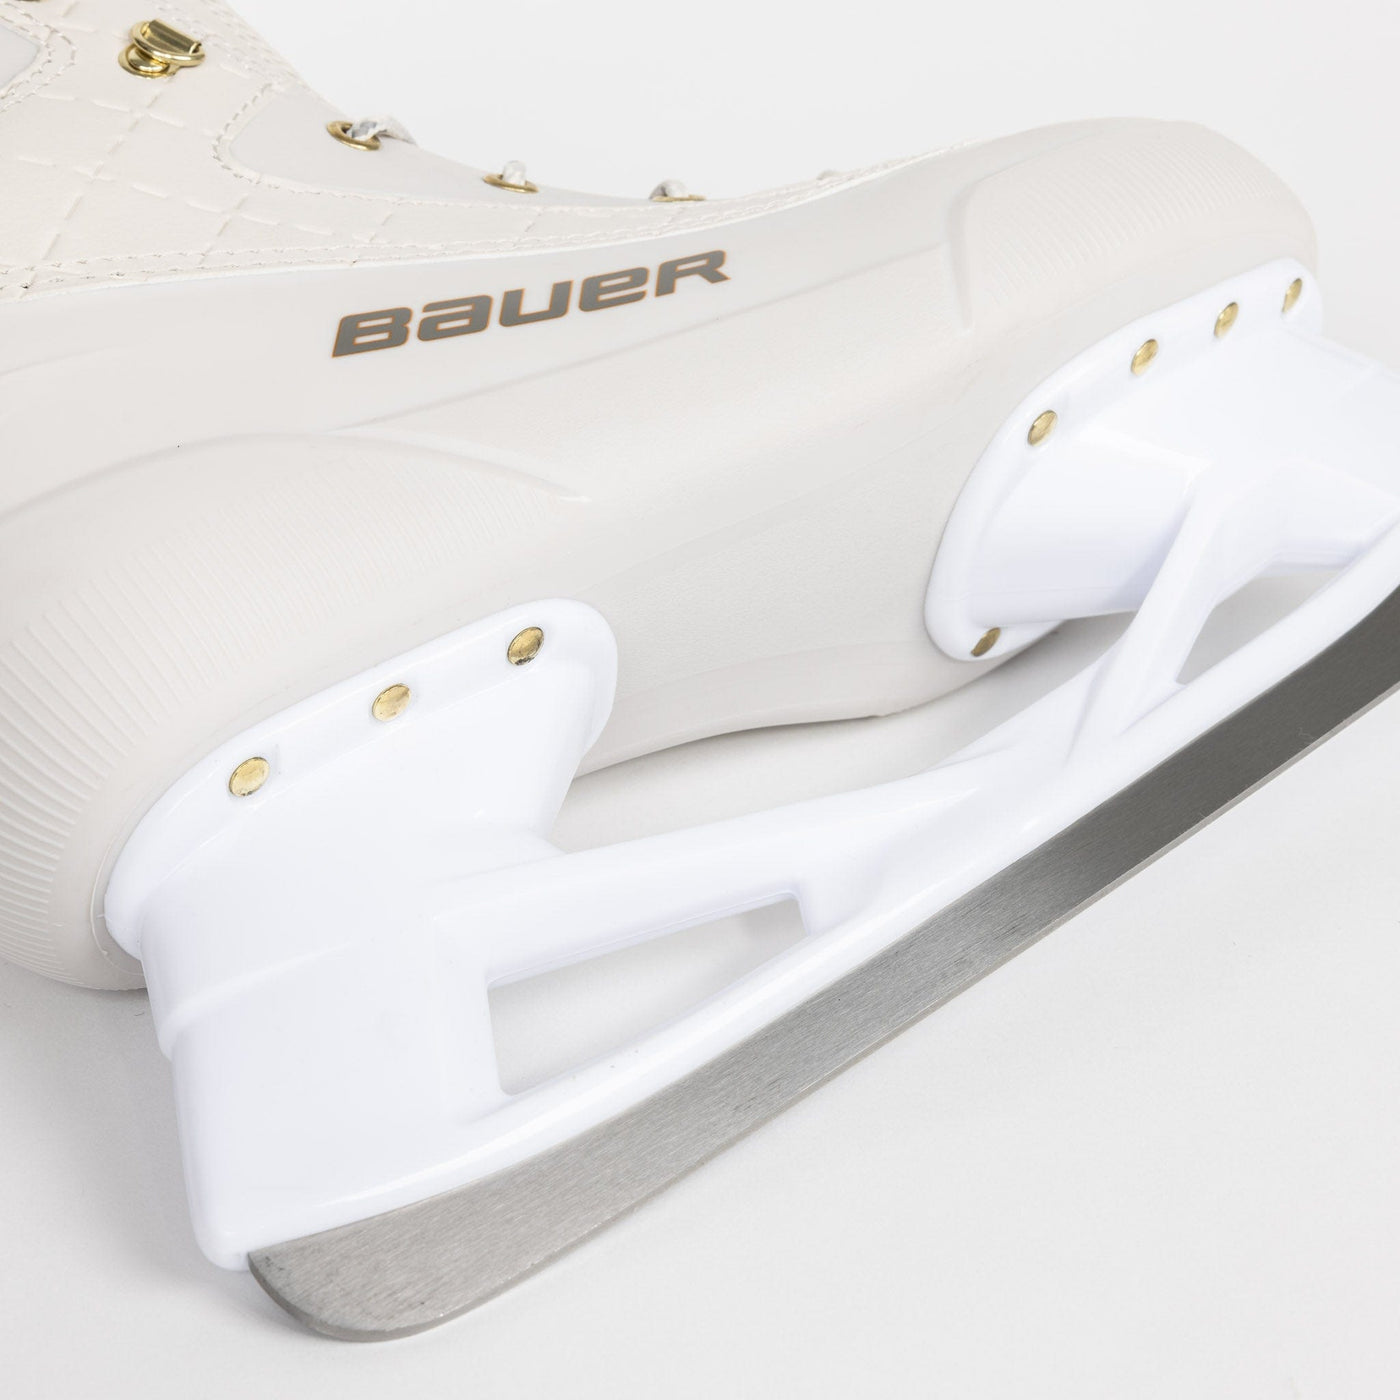 Bauer Tremblant Senior Recreational Skates - The Hockey Shop Source For Sports